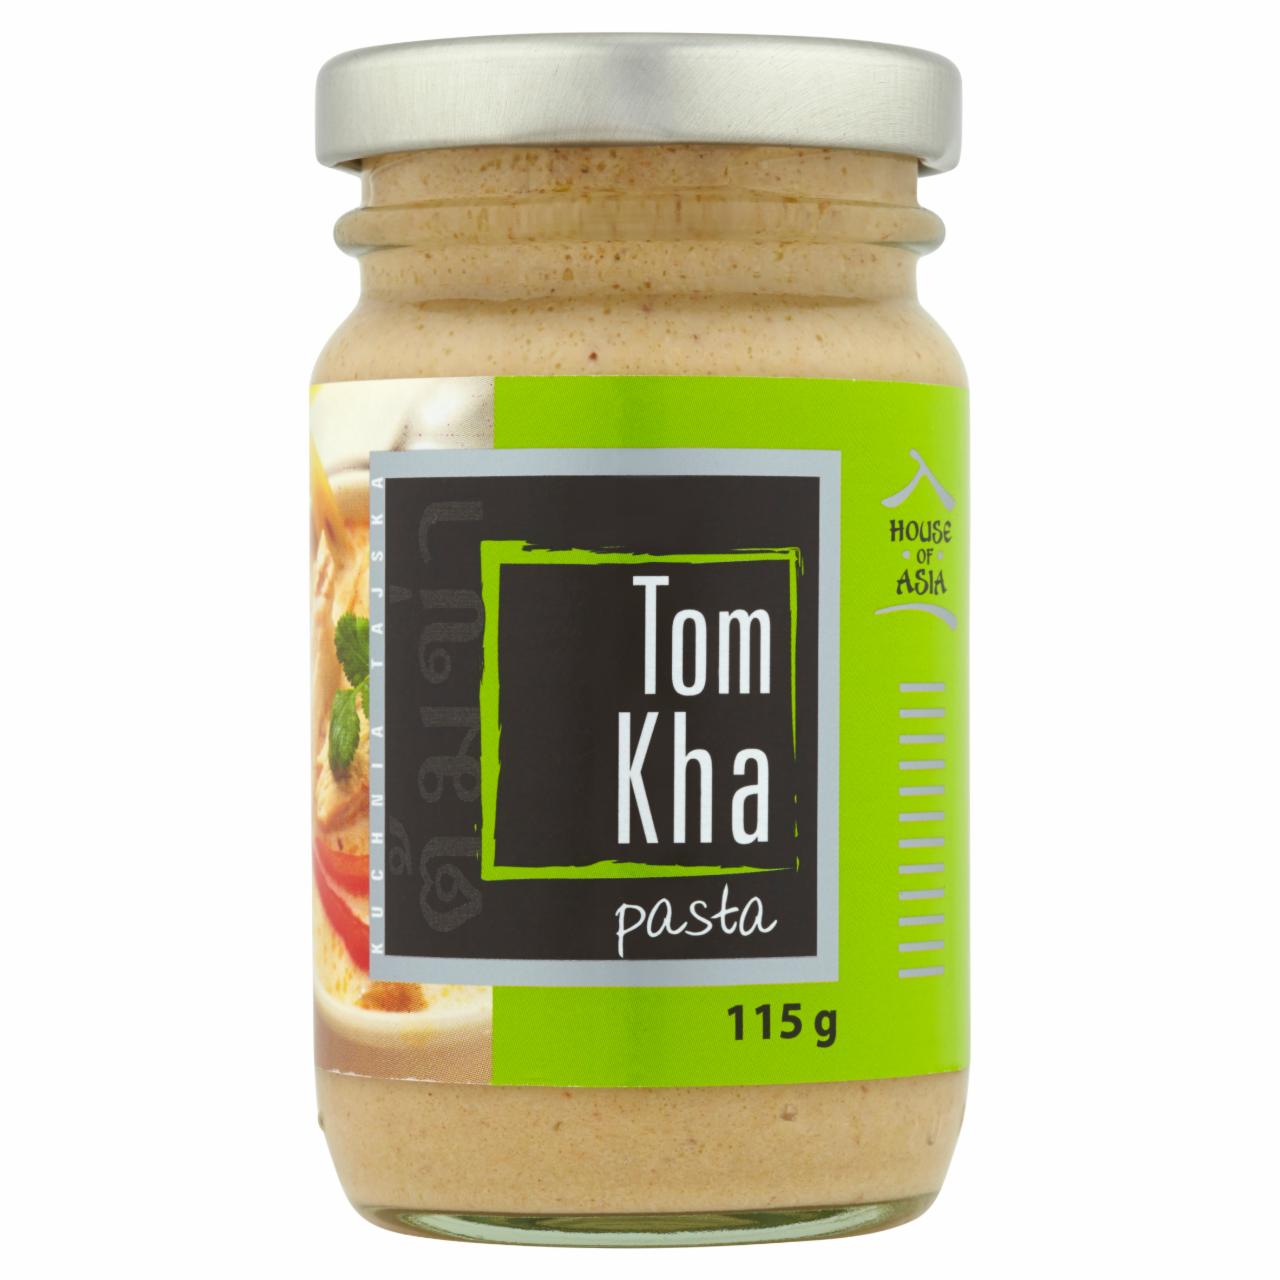 Zdjęcia - House of Asia Tom Kha Pasta 115 g